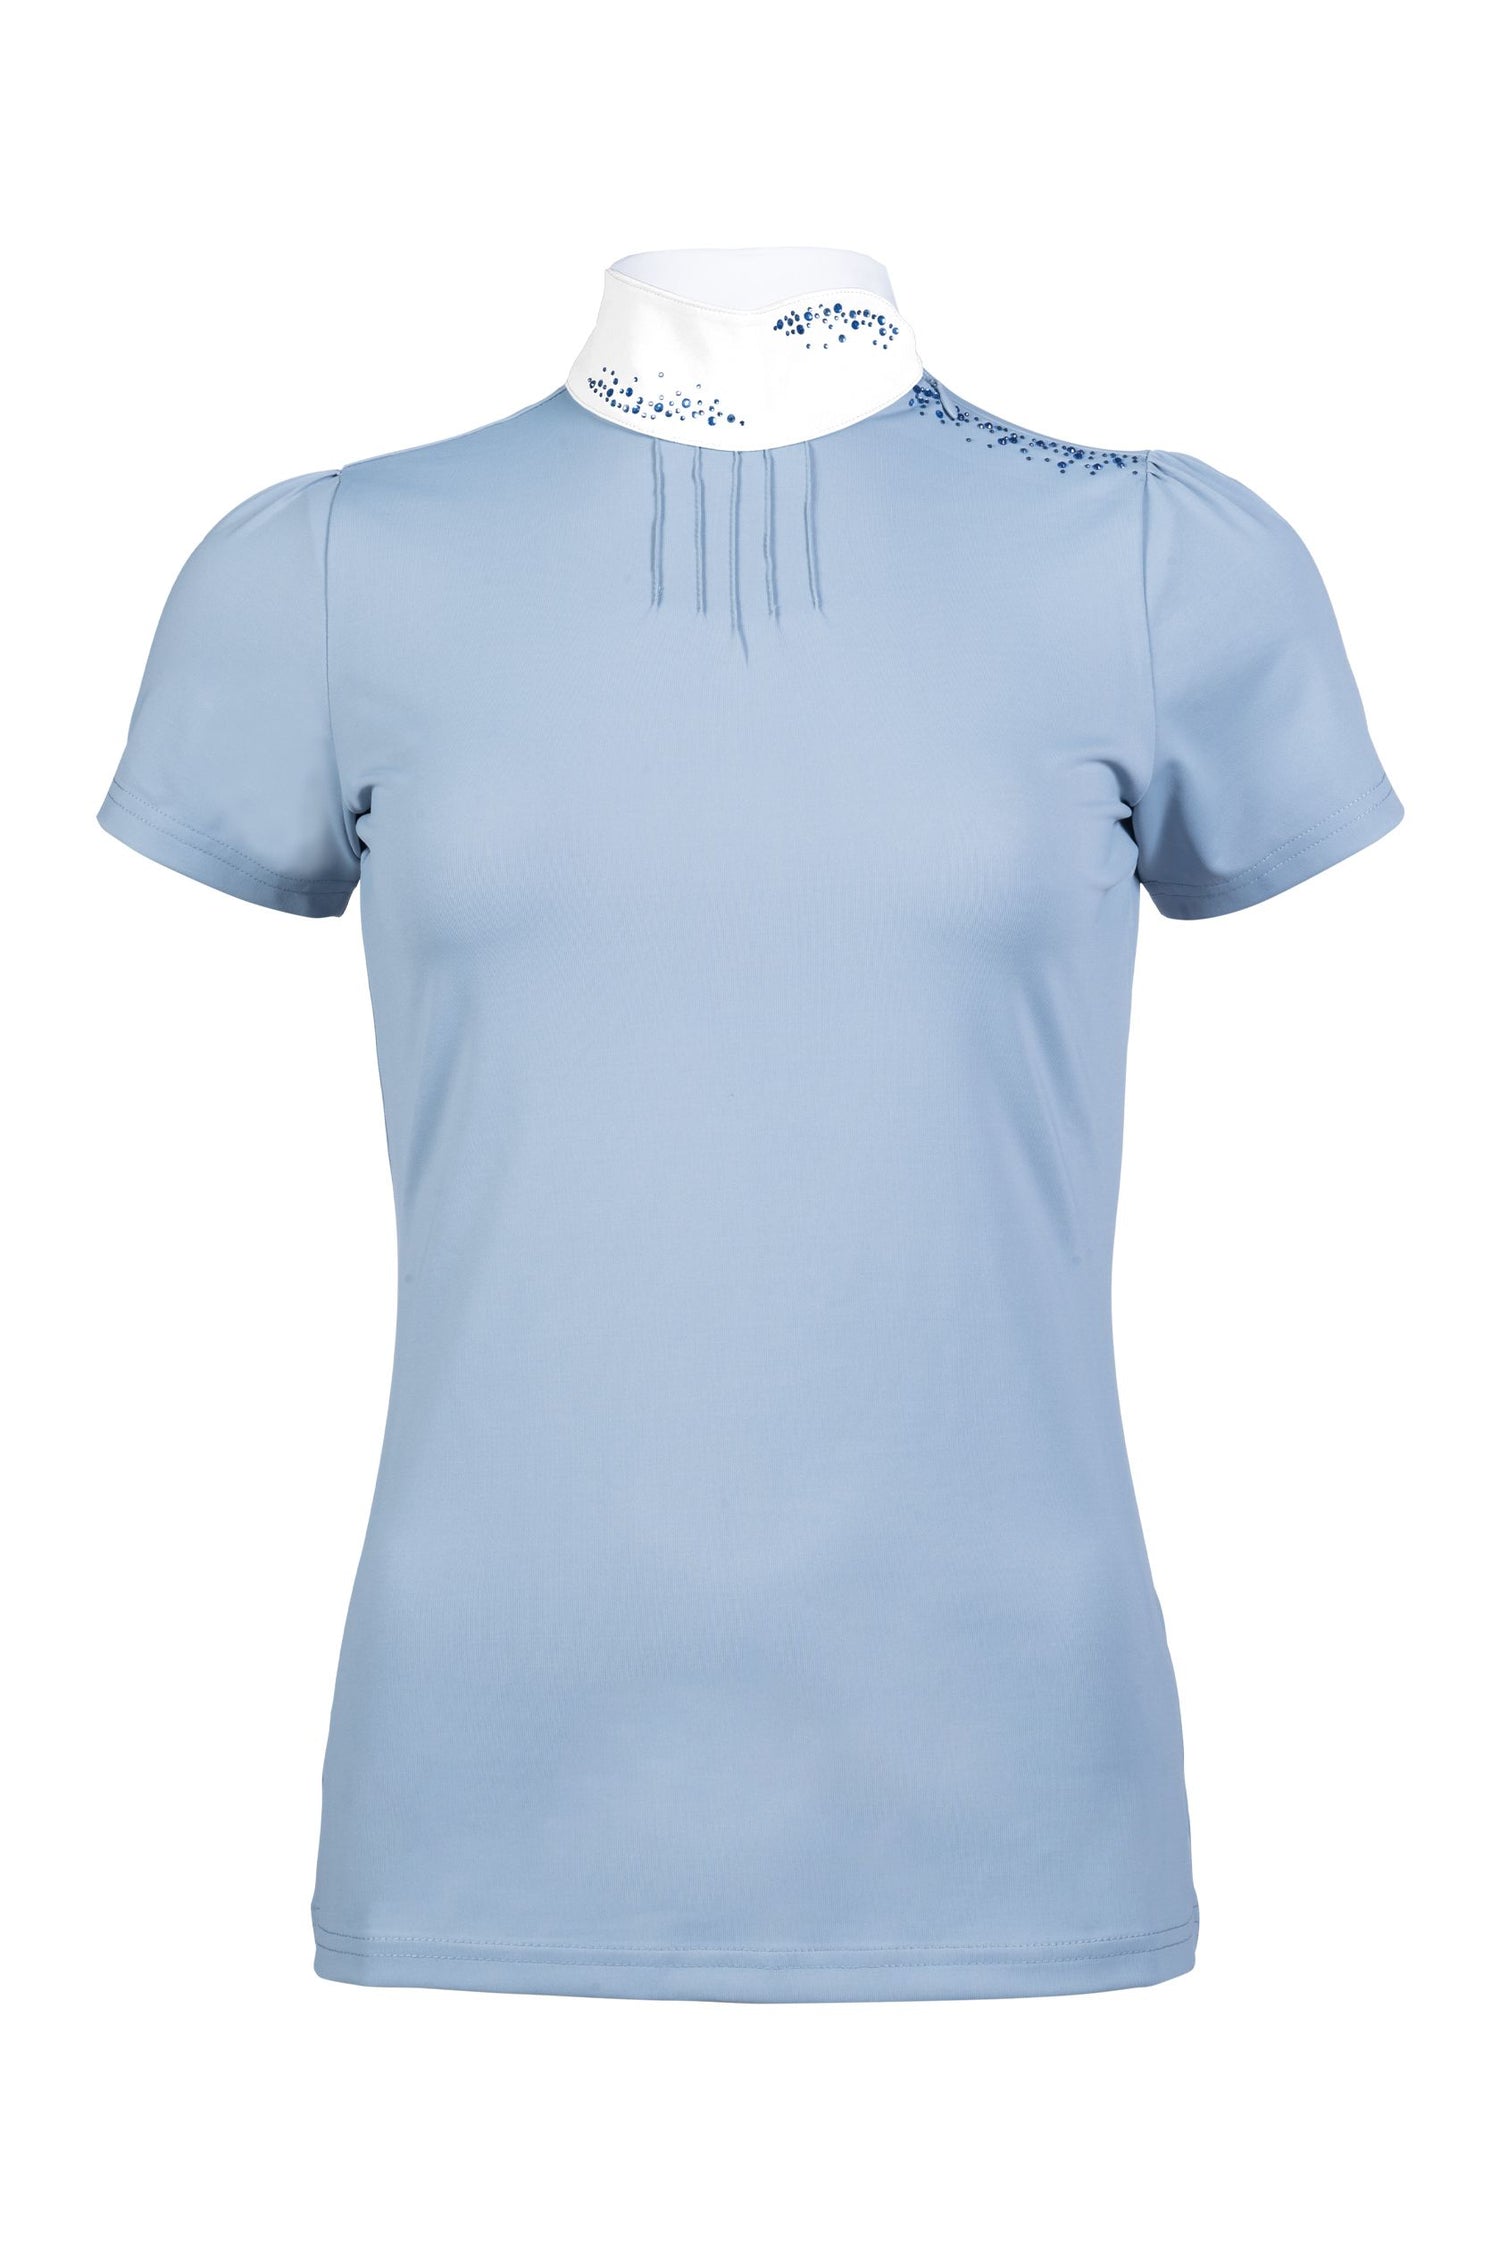 Ladies light blue show shirt